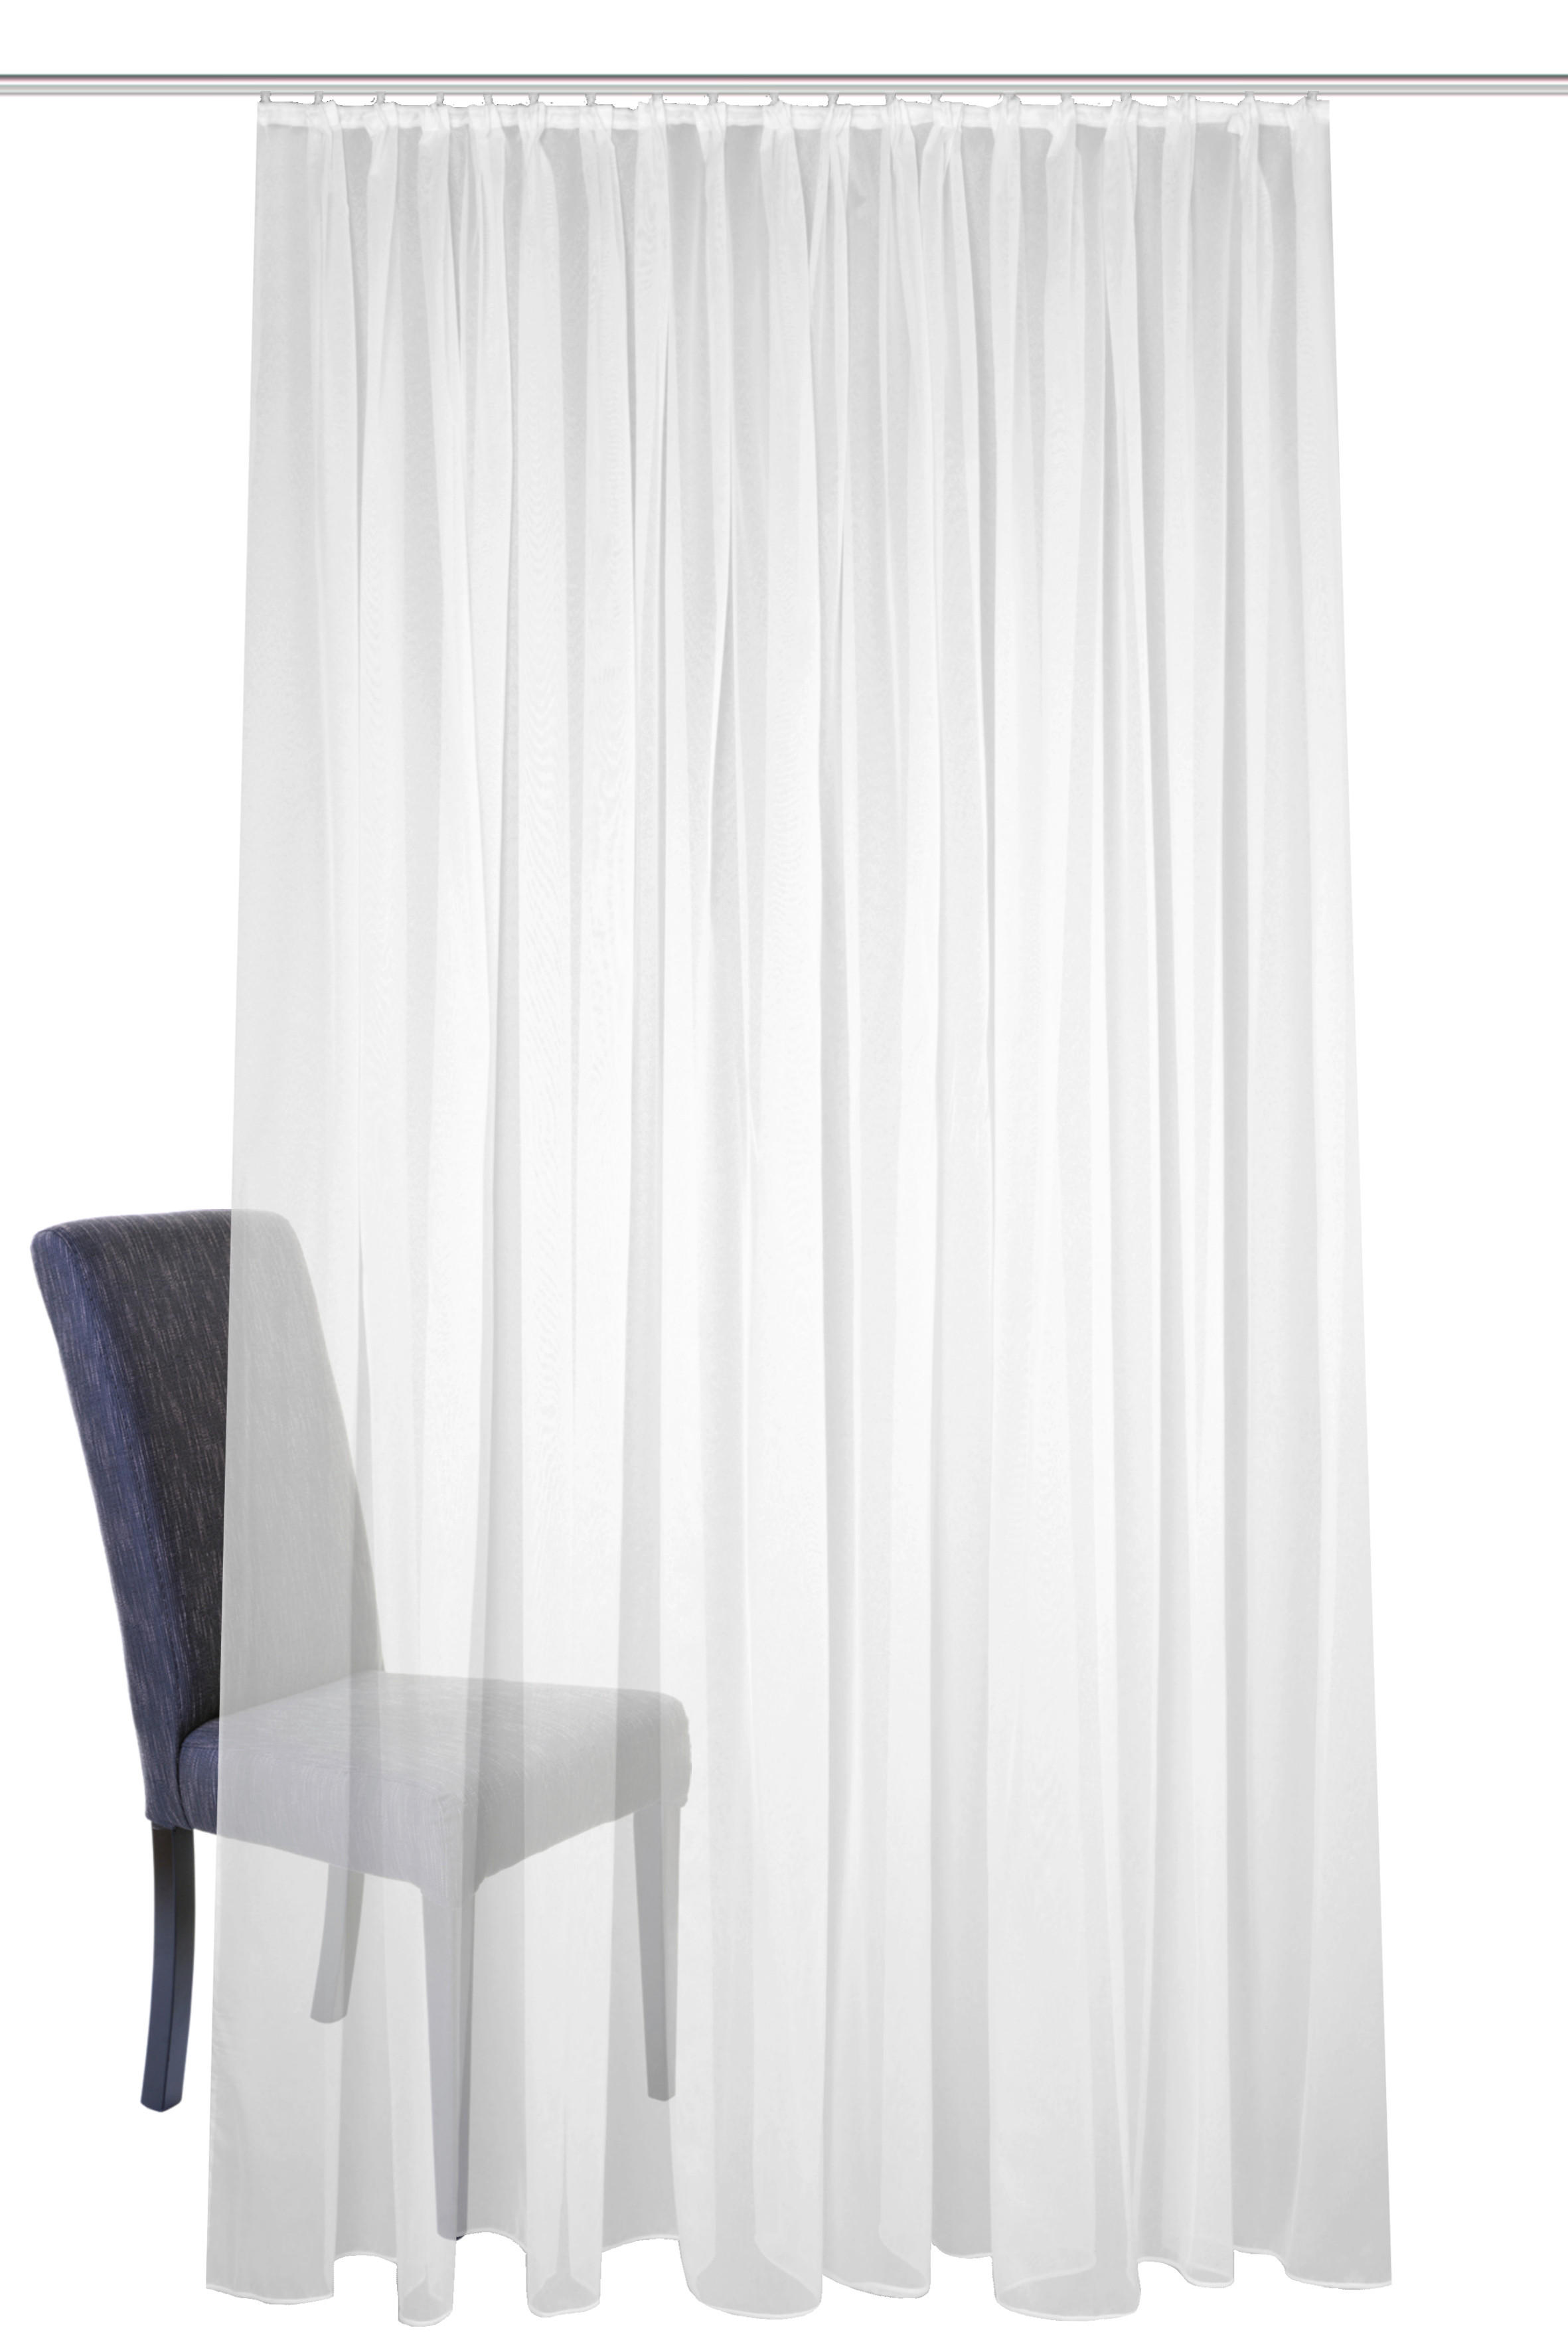 FERTIGSTORE  transparent  600/160 cm   - Weiß, Basics, Textil (600/160cm) - Schmidt W. Gmbh